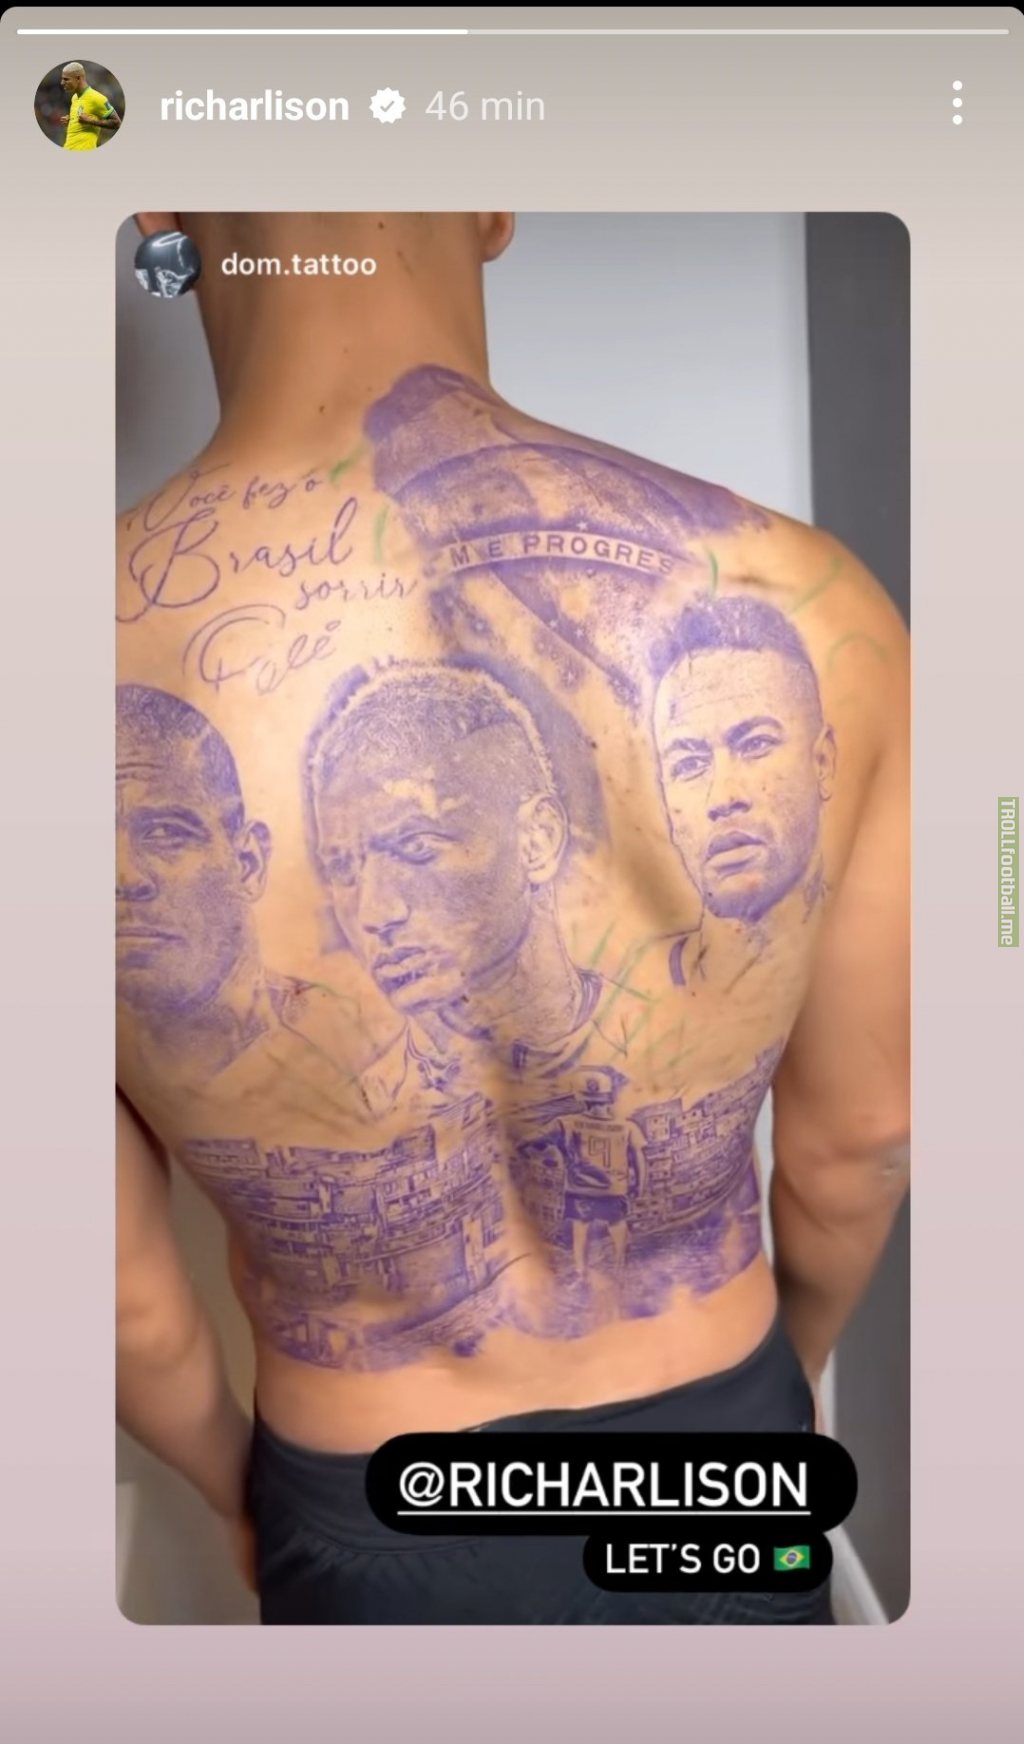 Richarlison tattoed R9, Neymar and himself on his back